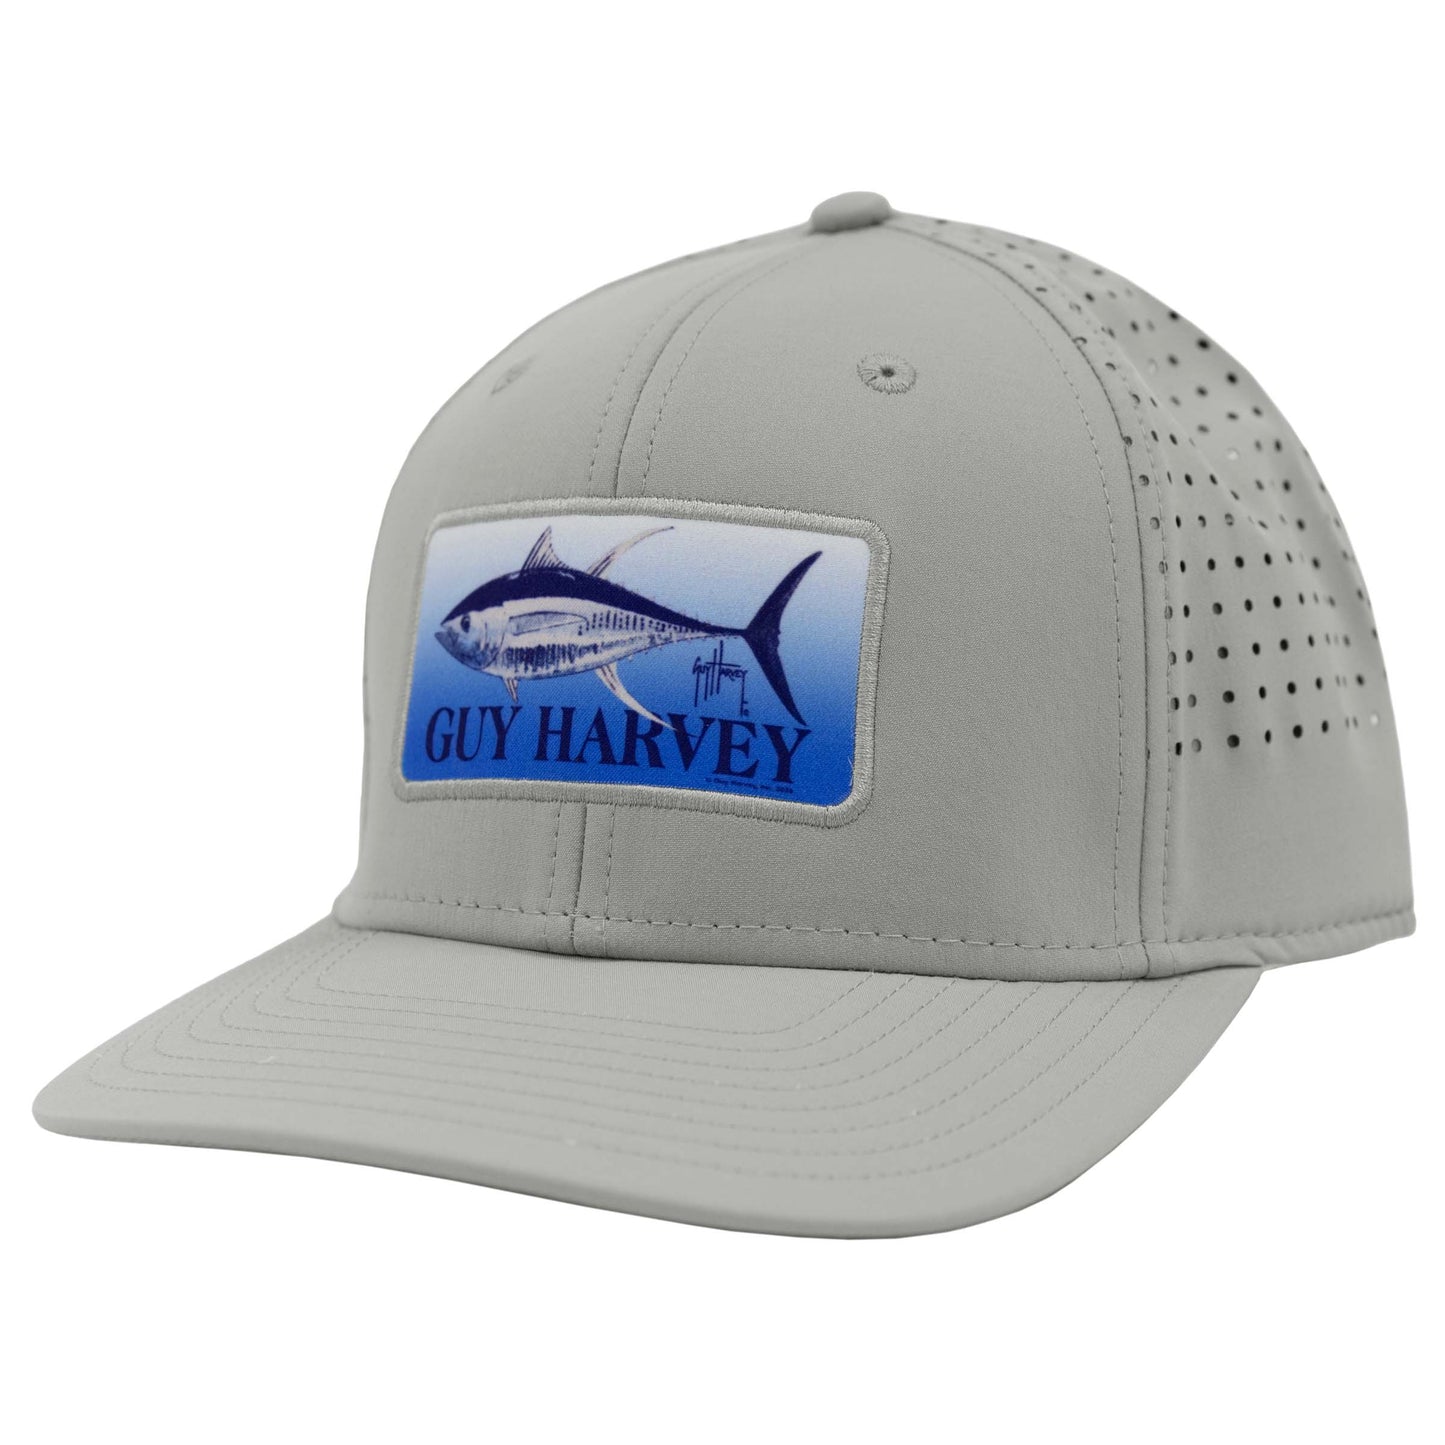 Guy Harvey Men's Total Tuna Flex Fitted Trucker Hat - Gray